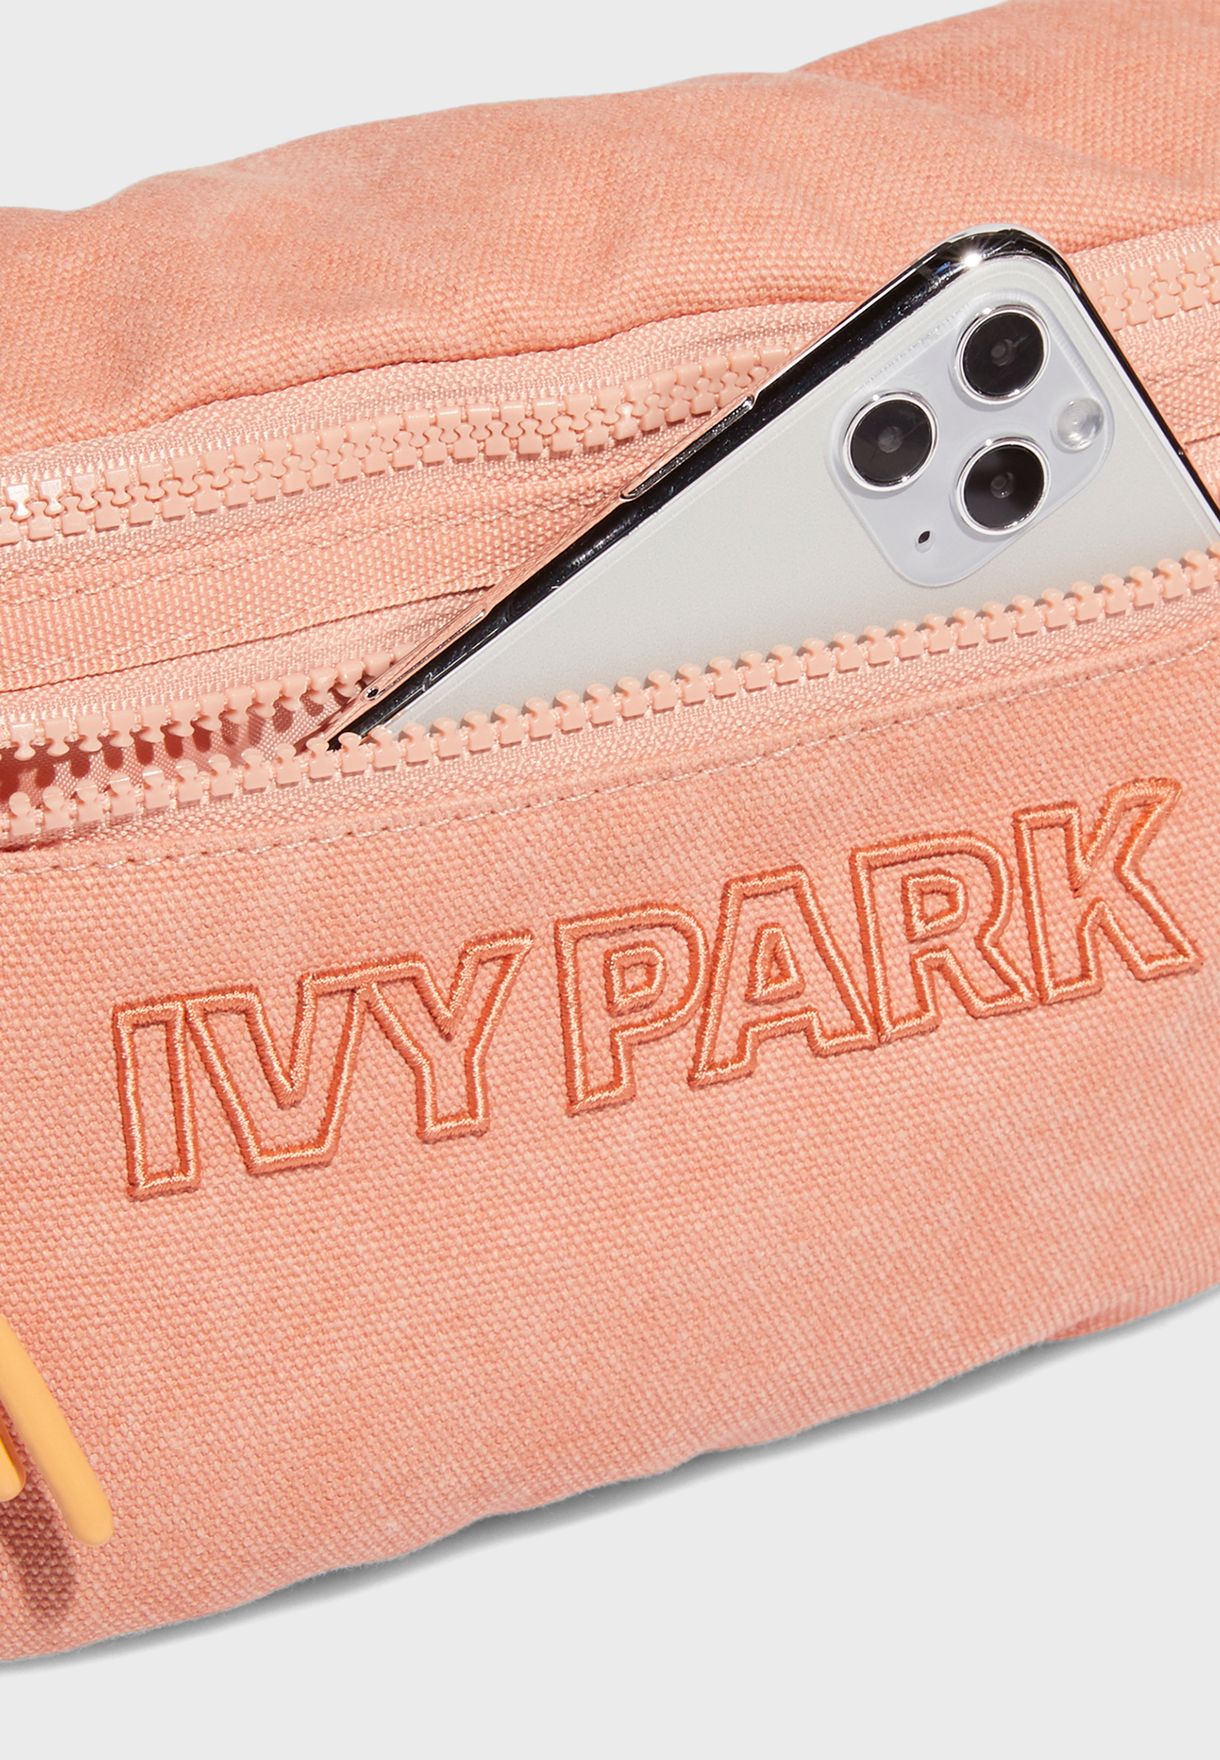 Ivy Park Small Waist bag